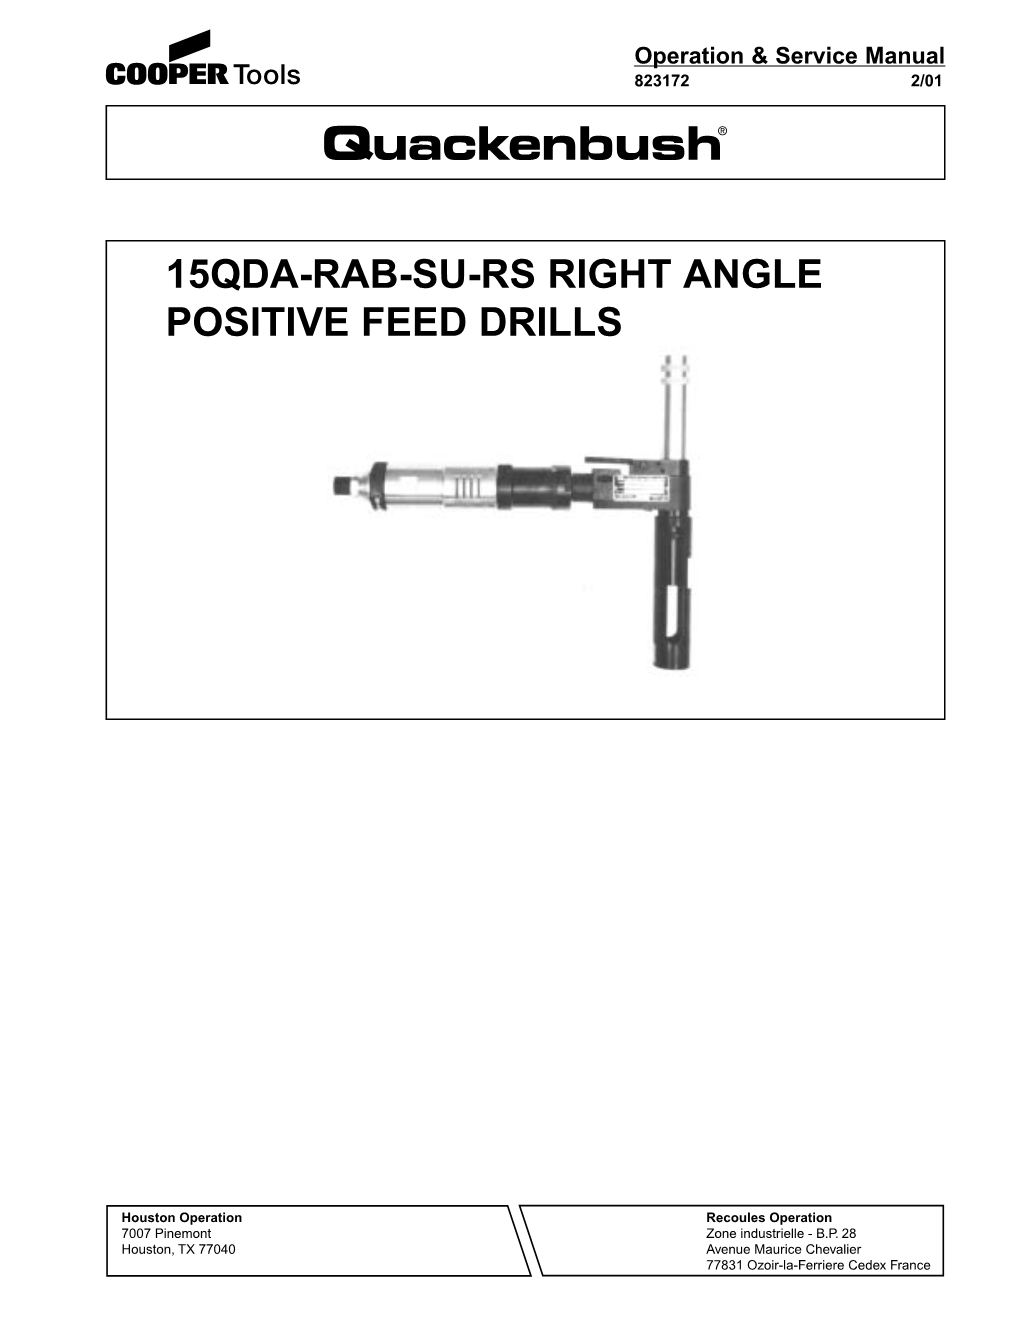 15Qda-Rab-Su-Rs Right Angle Positive Feed Drills